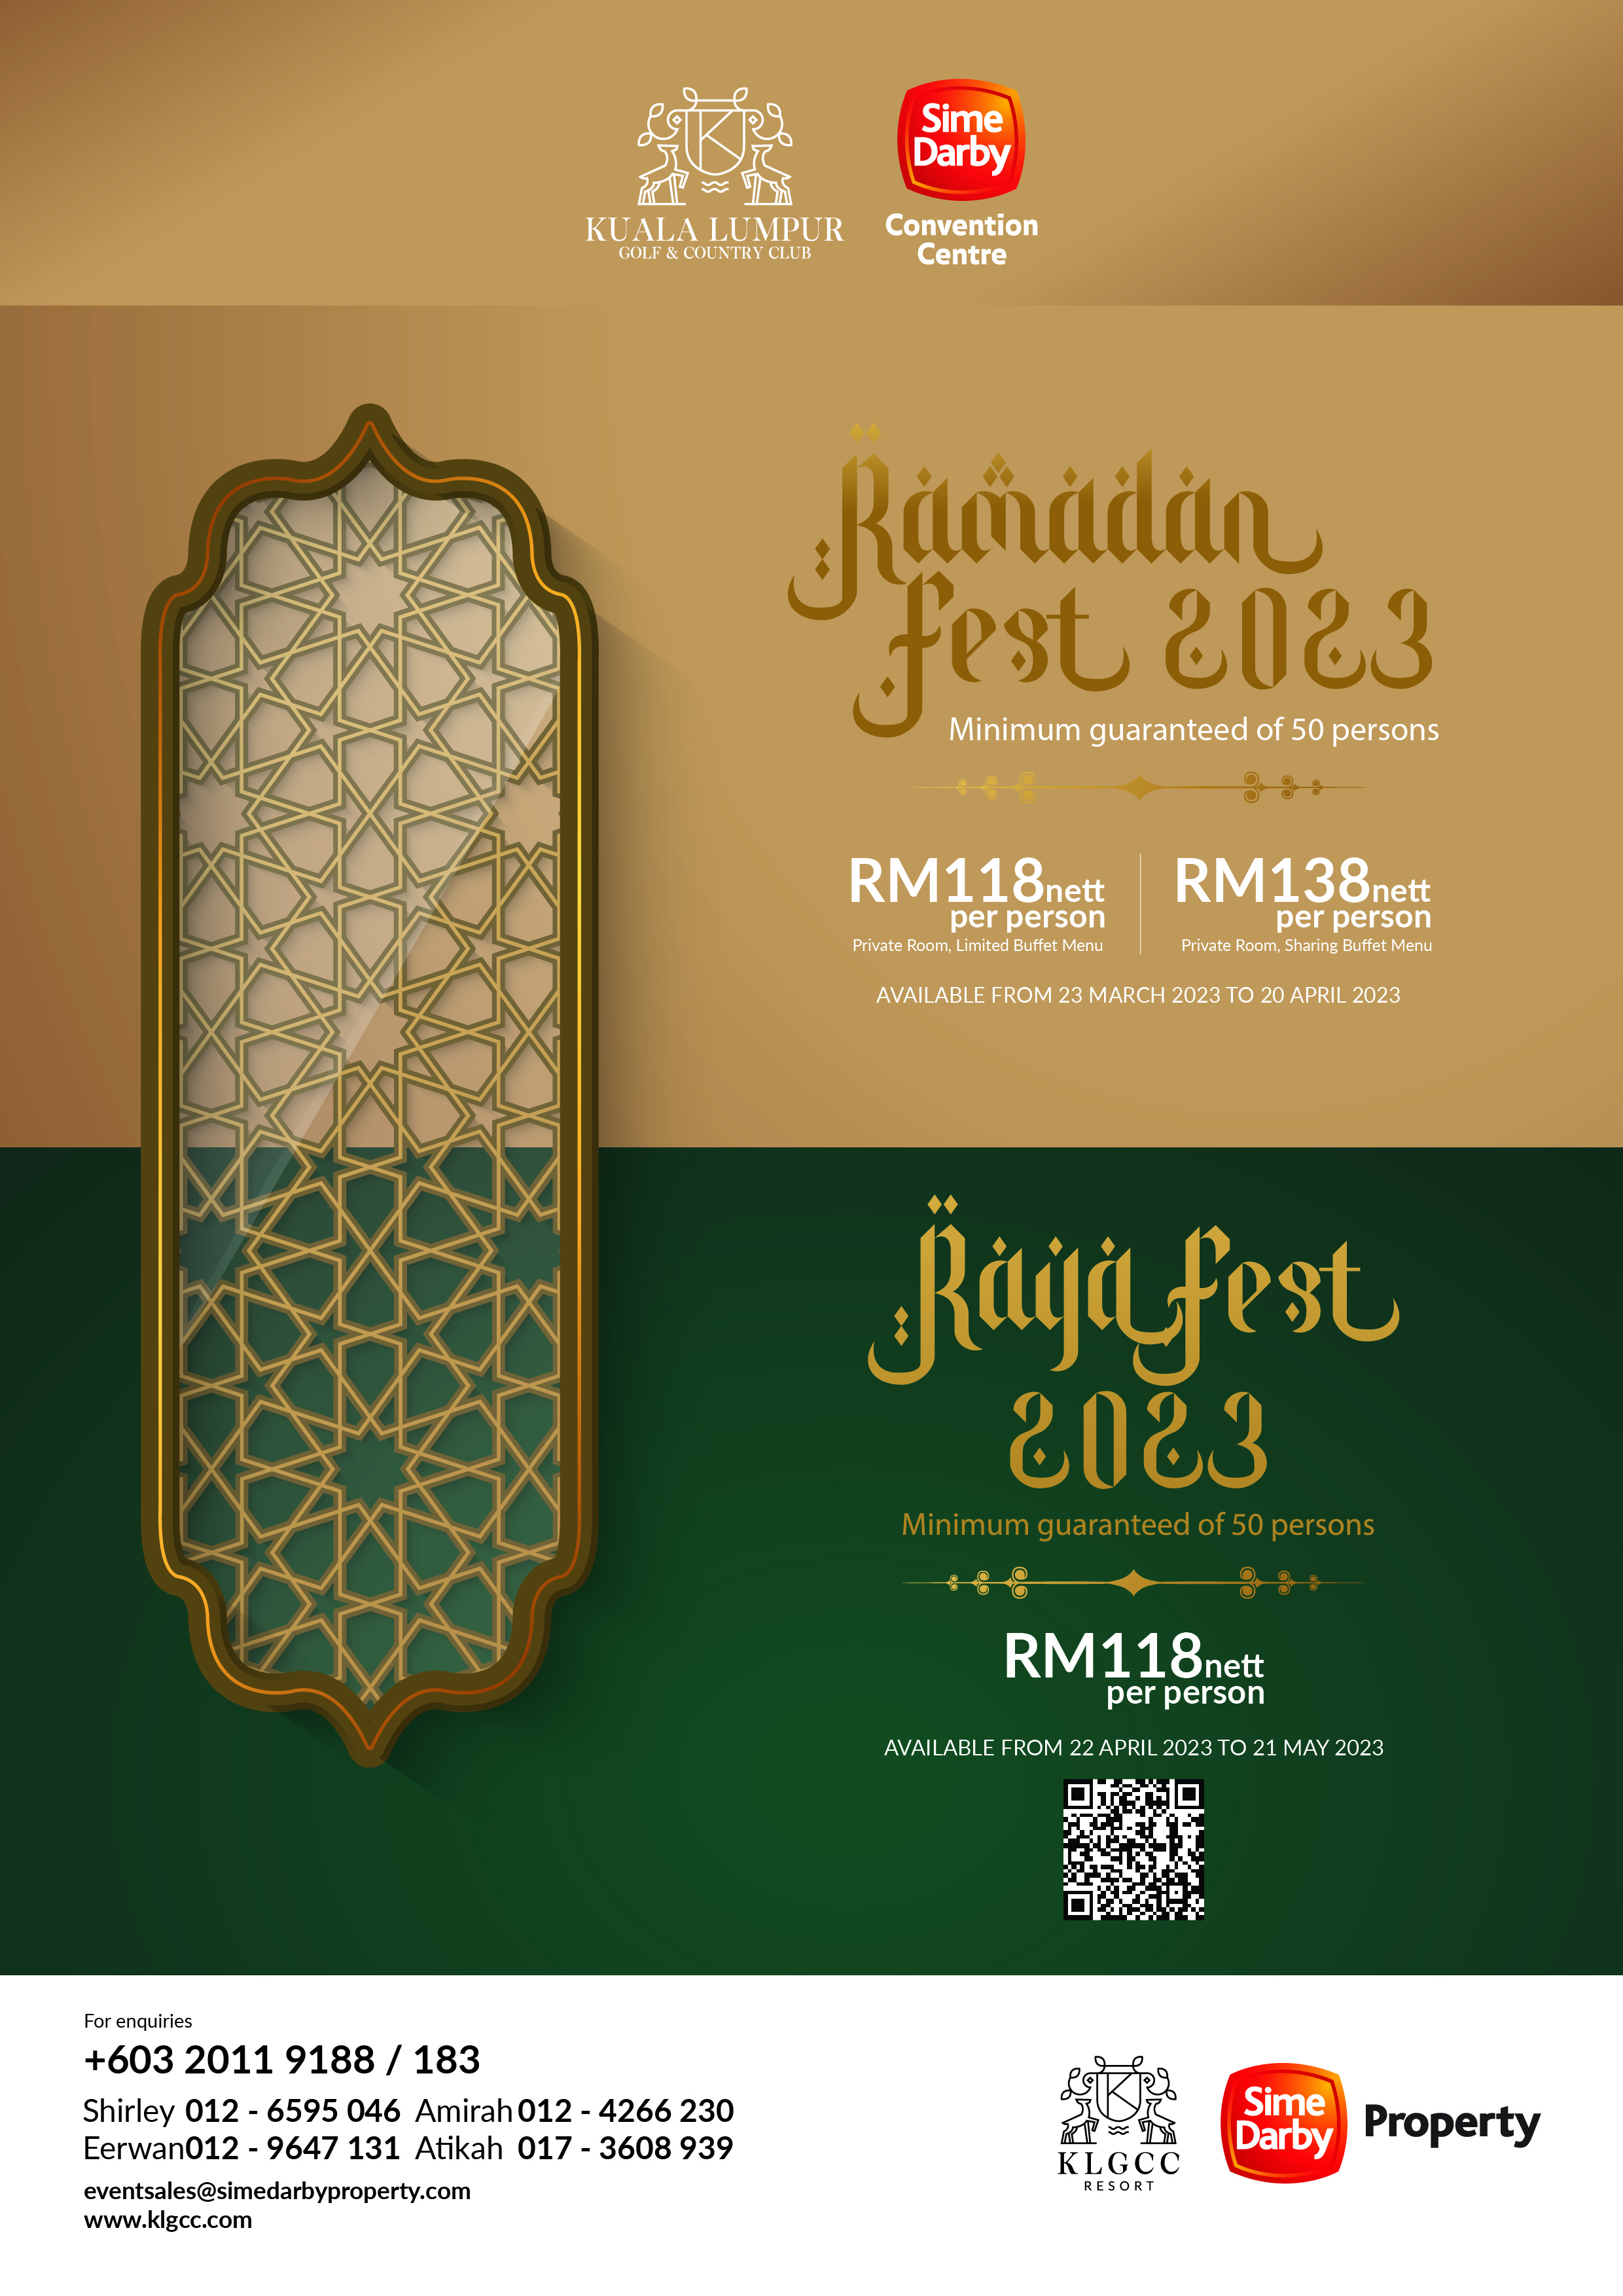 Ramadan and Raya Fest 2023